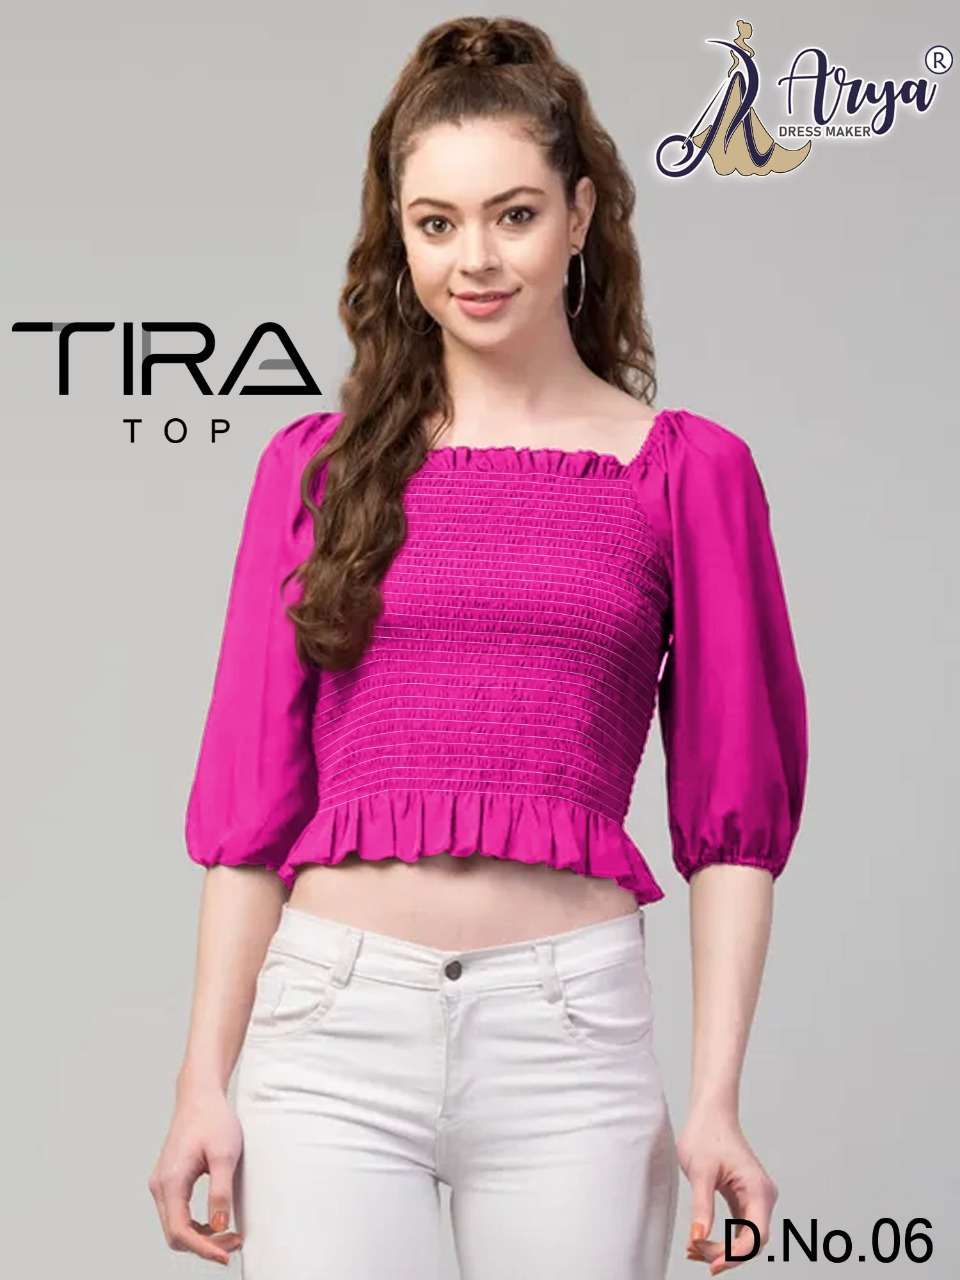 TIRA TOPS BY ARYA DRESS MAKER 01 TO 06 SERIES HEAVY CREPE TOPS